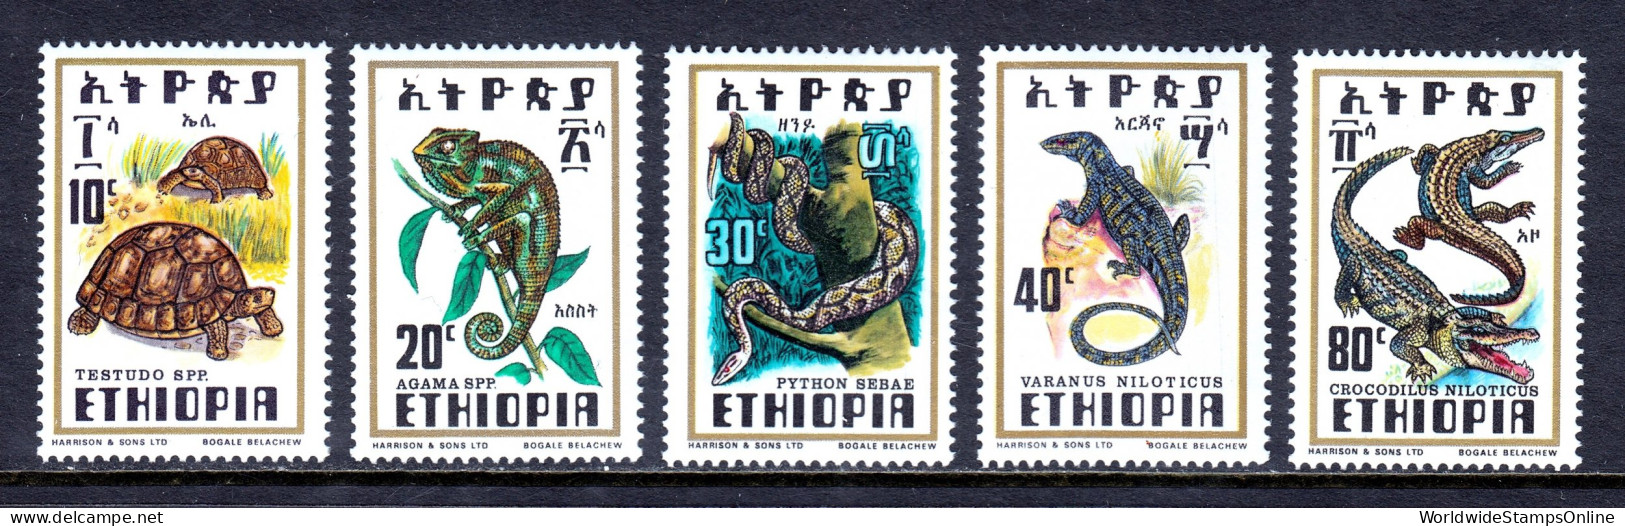 Ethiopia - Scott #812-816 - MNH - See Description - SCV $5.10 - Ethiopia